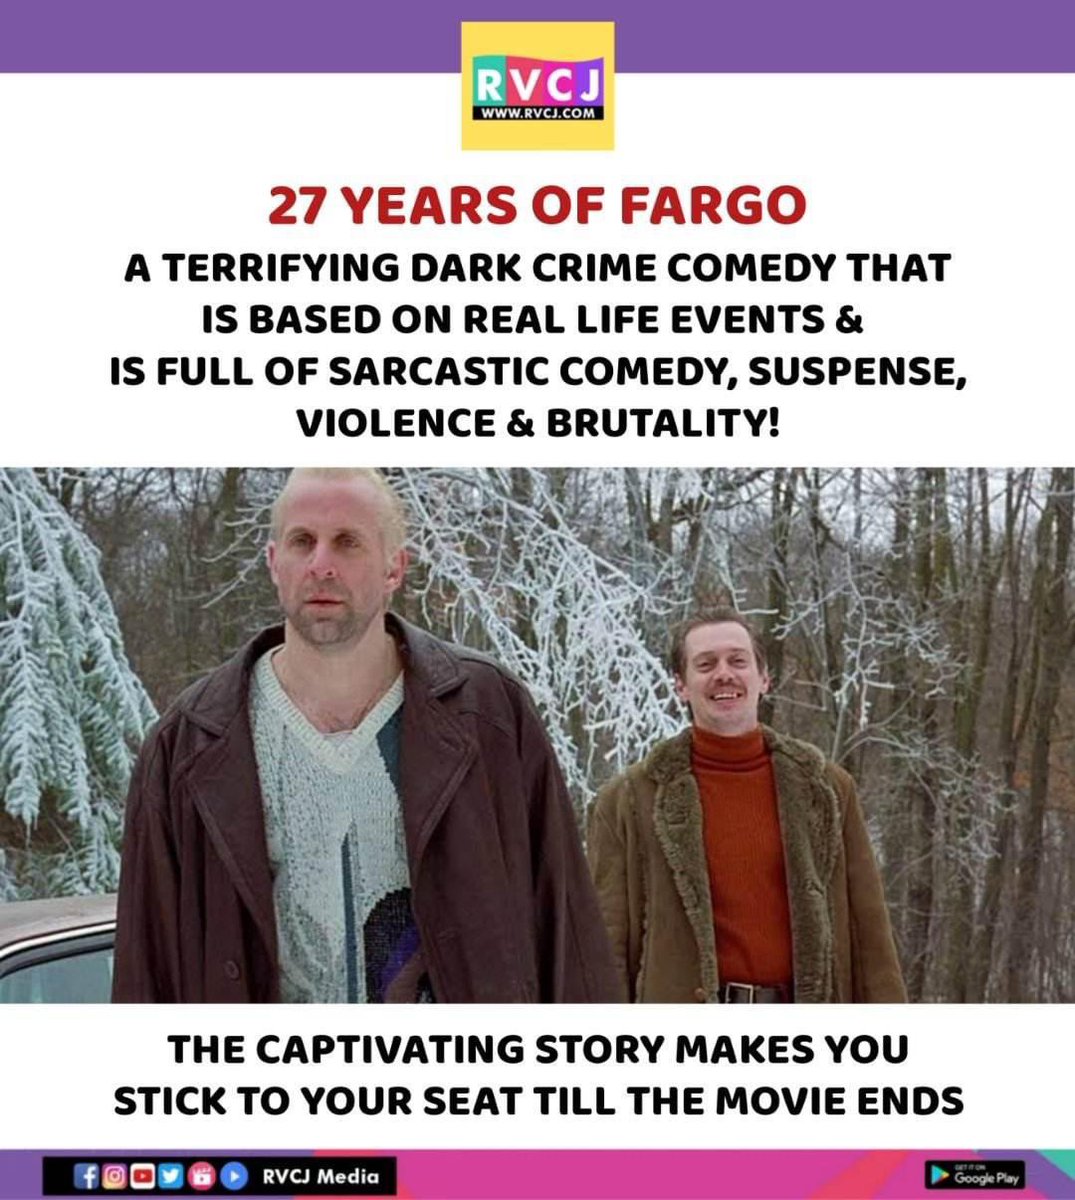 27 Years of Fargo!
#fargo #williamhmacy #stevebuscemi #ethancoen #hollywood #rvcjmovies